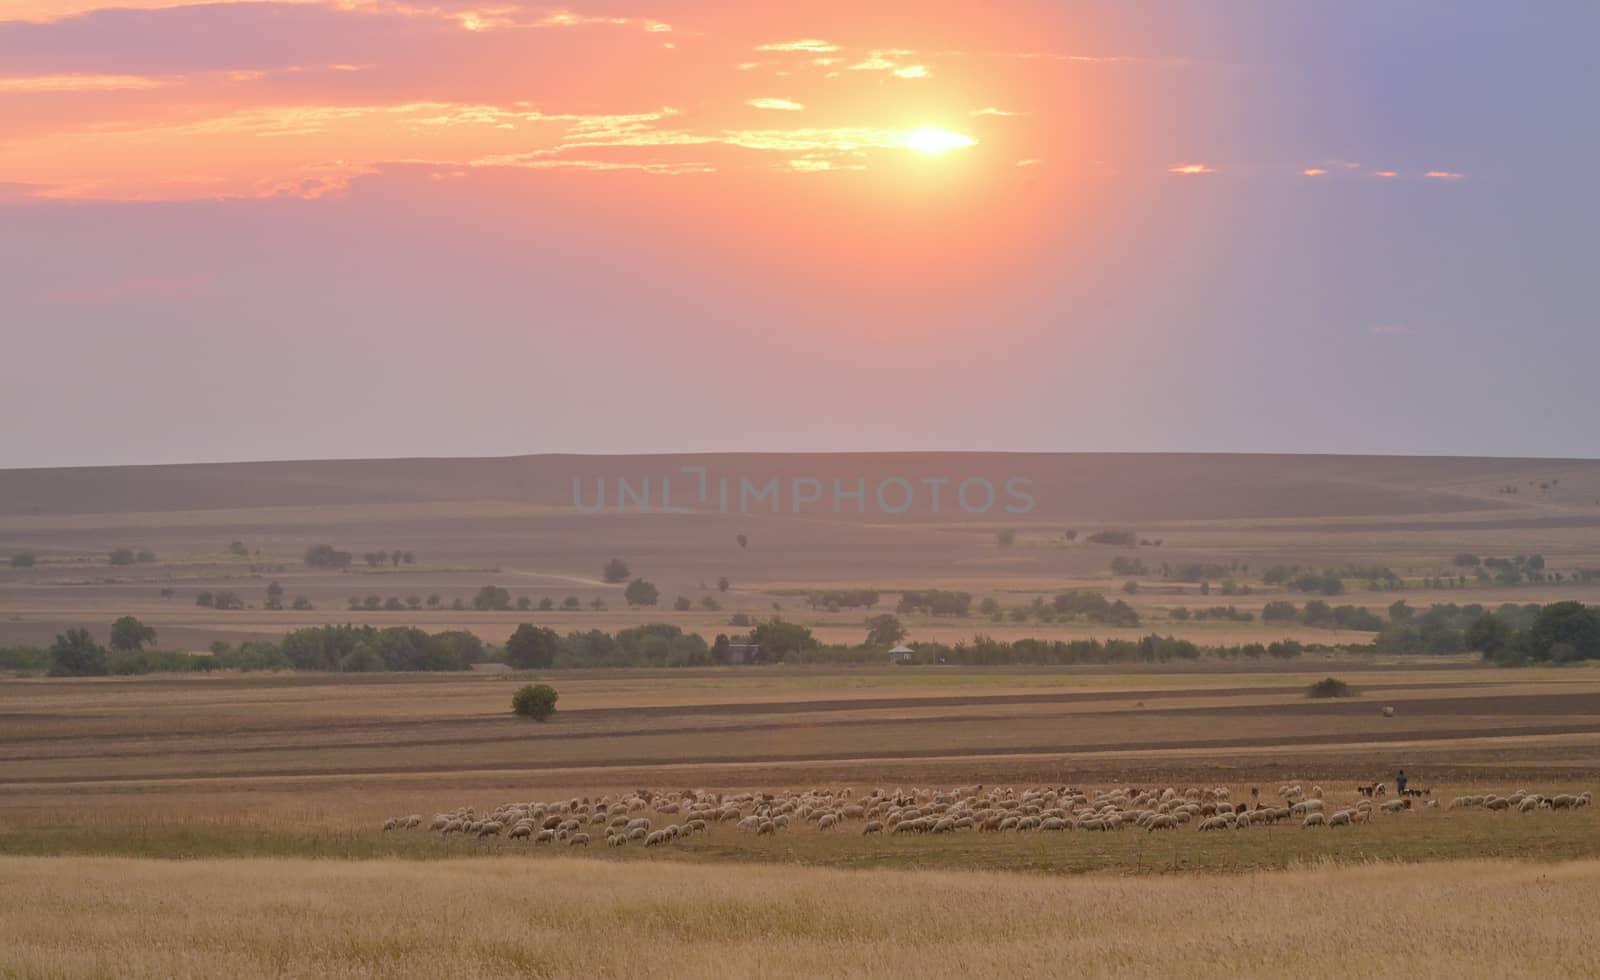 Sheep On Field In Warm Sunset Light